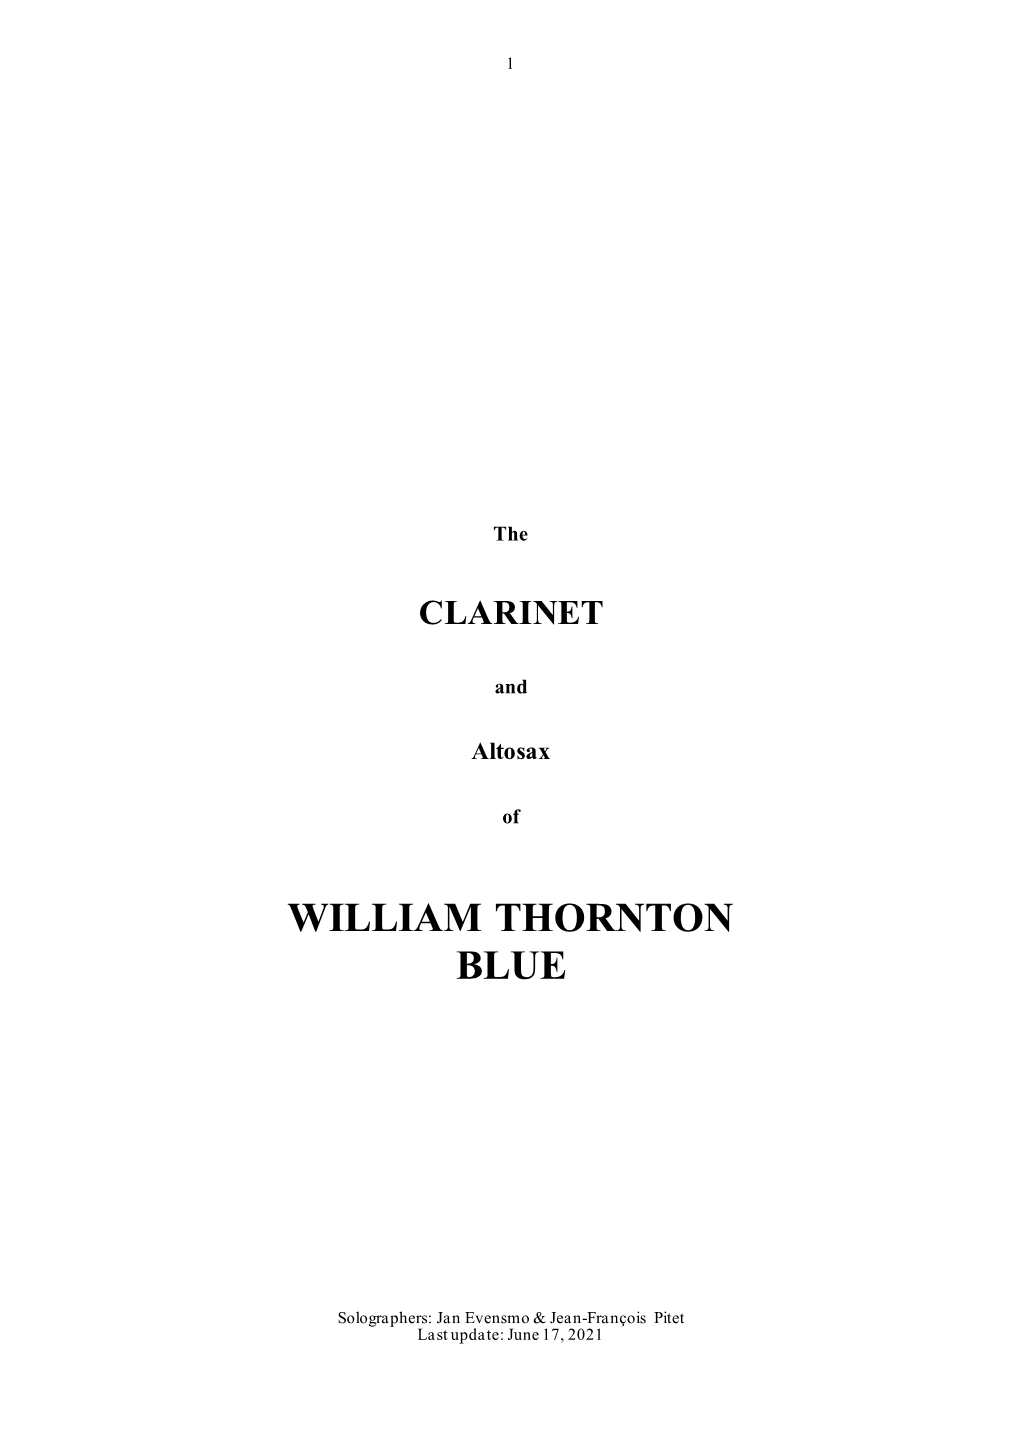 Download the CLARINET of William Thornton Blue